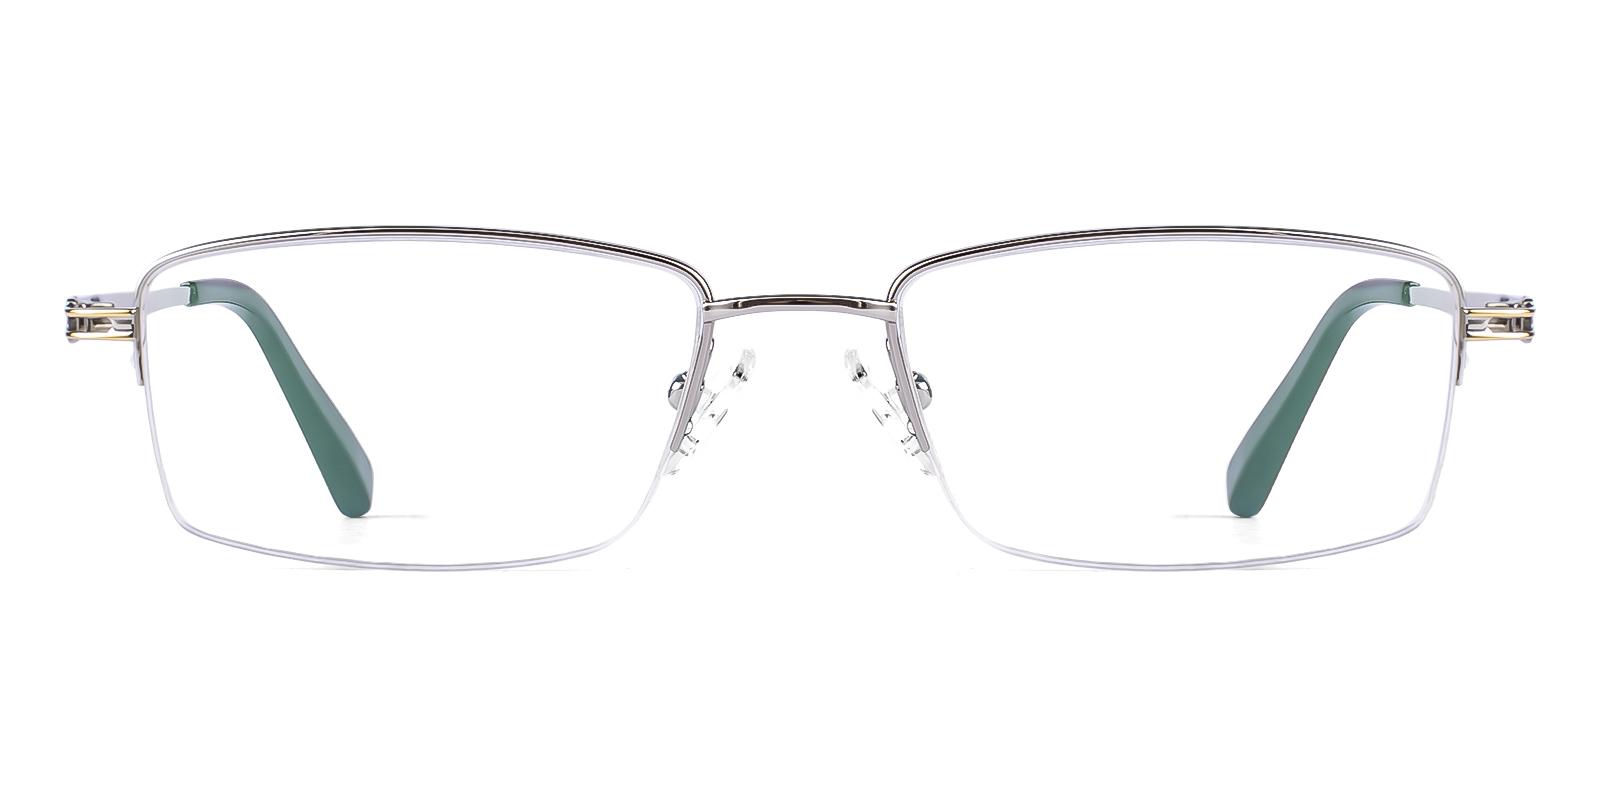 Tingine Silver Titanium Eyeglasses , NosePads Frames from ABBE Glasses